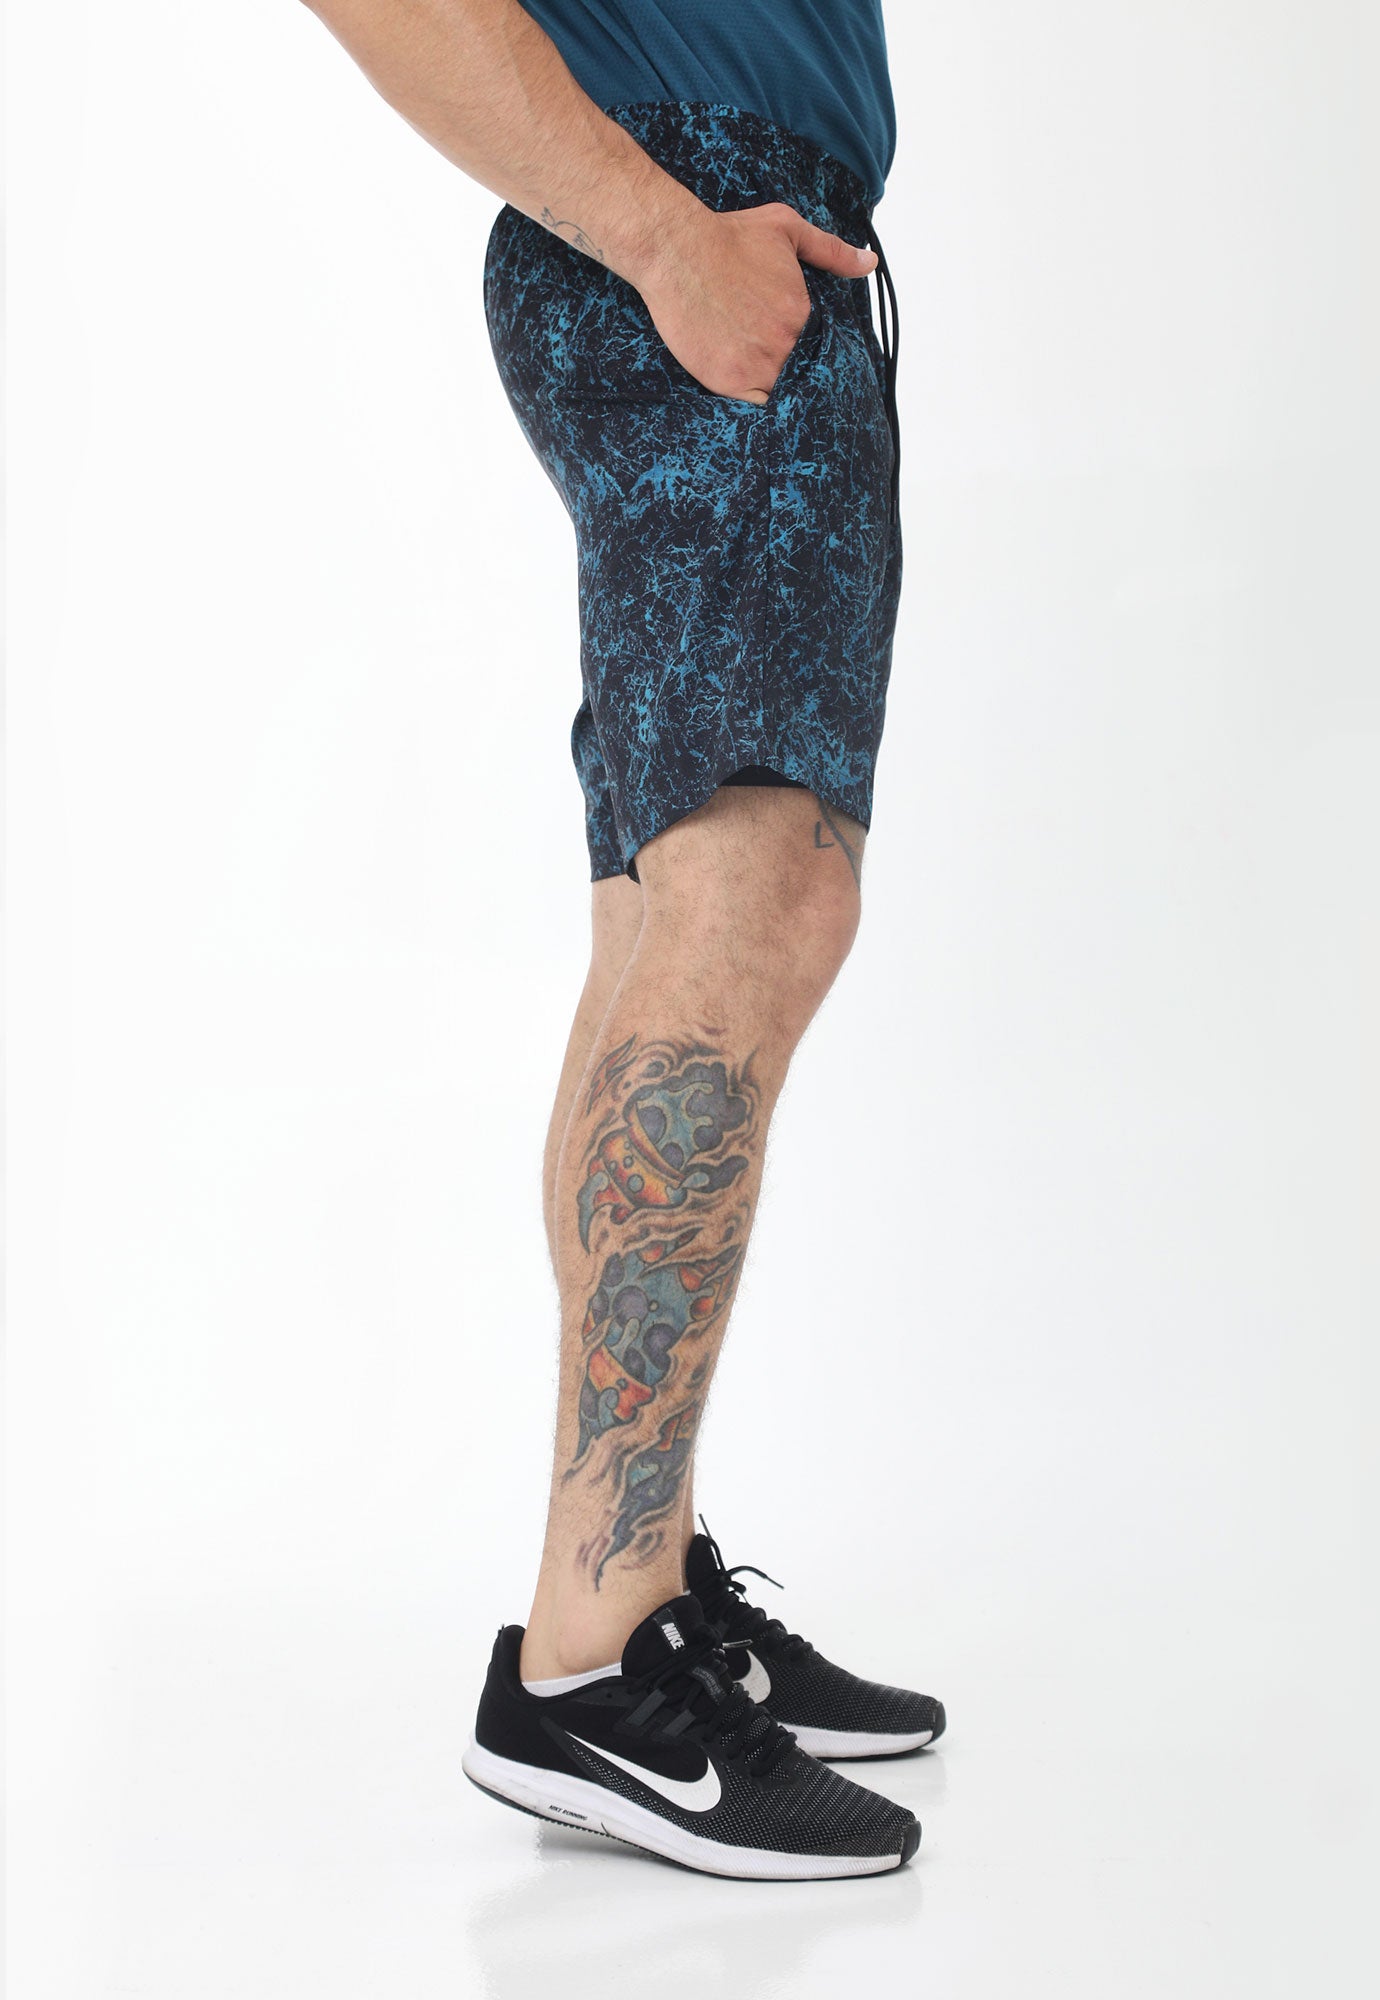 Pantaloneta deportiva azul sublimada, ciclista interno, tela impermeable y cordón ajustable para hombre